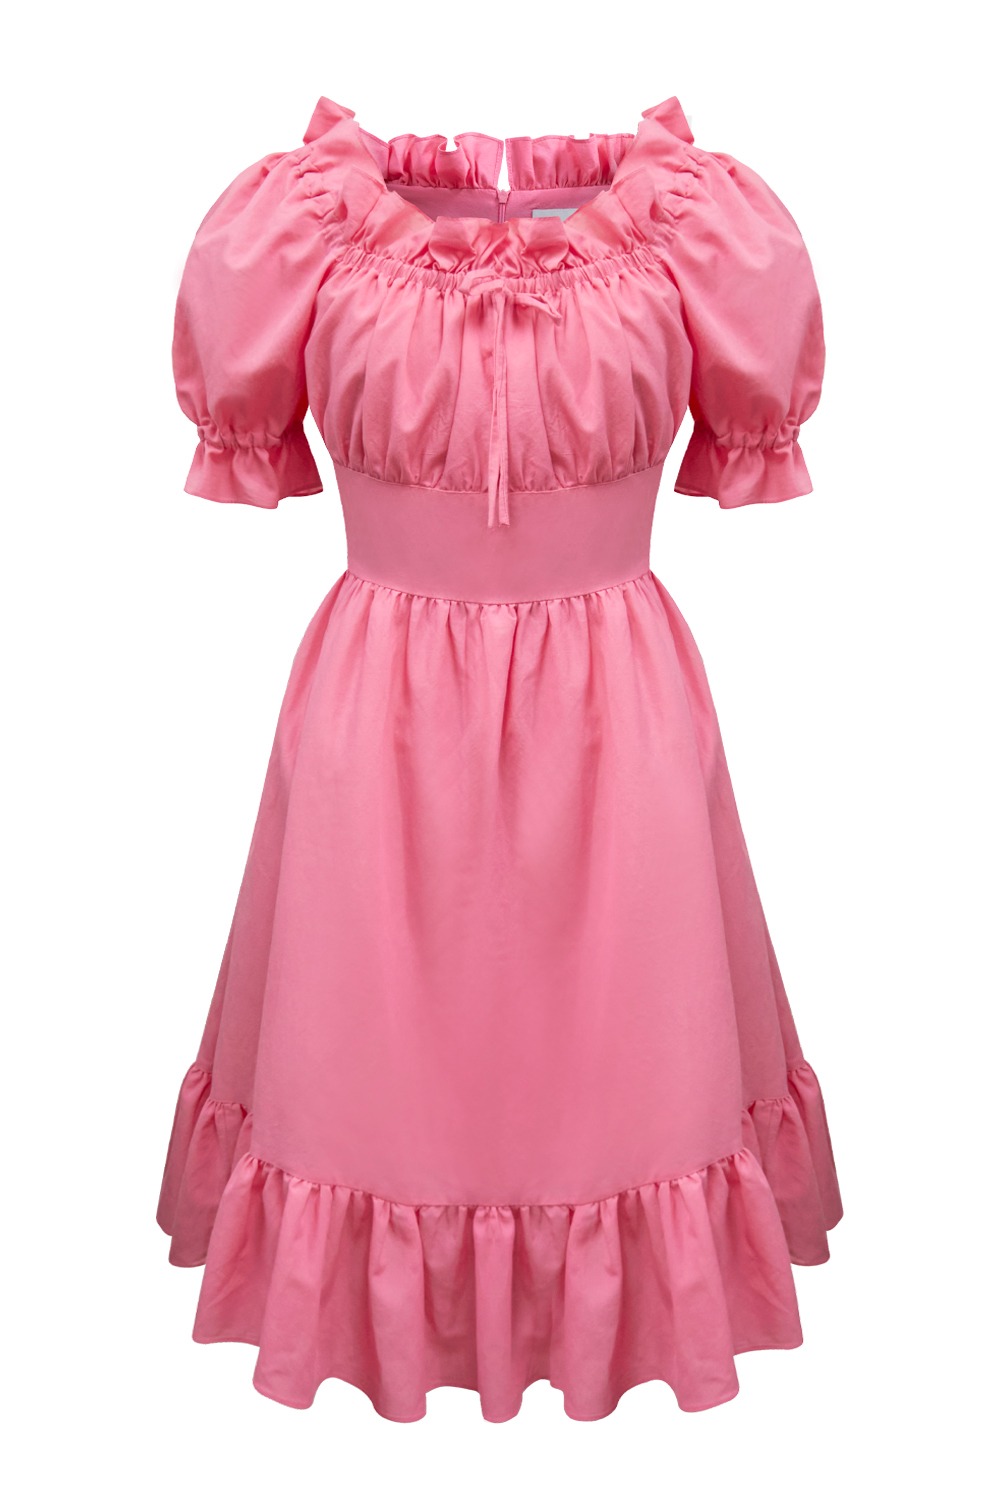 [70% SALE] Blossom volume dress (Pink)